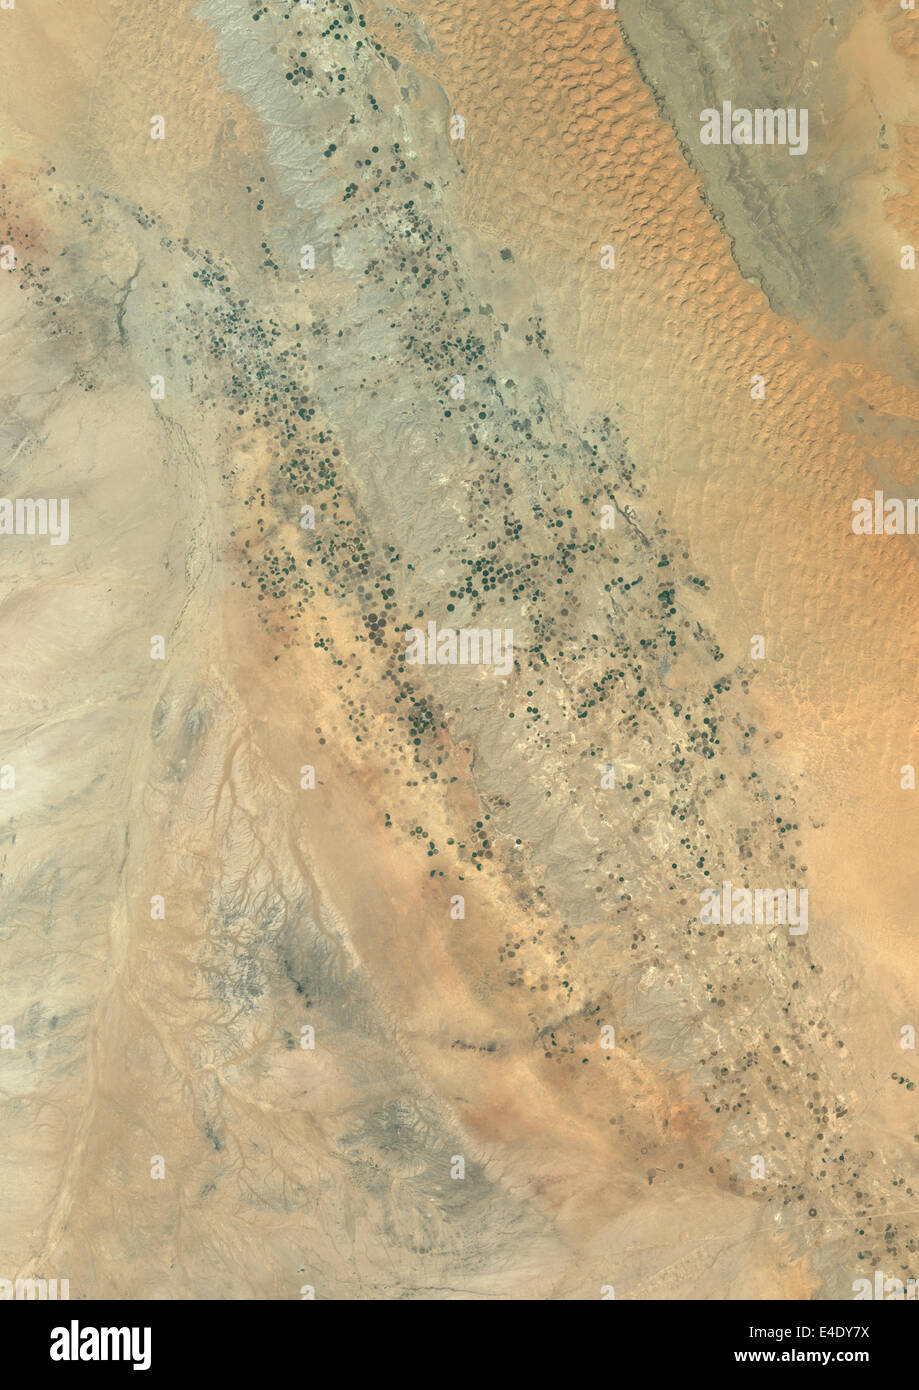 Agriculture In The Desert, Riyadh Province, Saudi Arabia, True Colour Satellite Image. True colour satellite image of agricultur Stock Photo